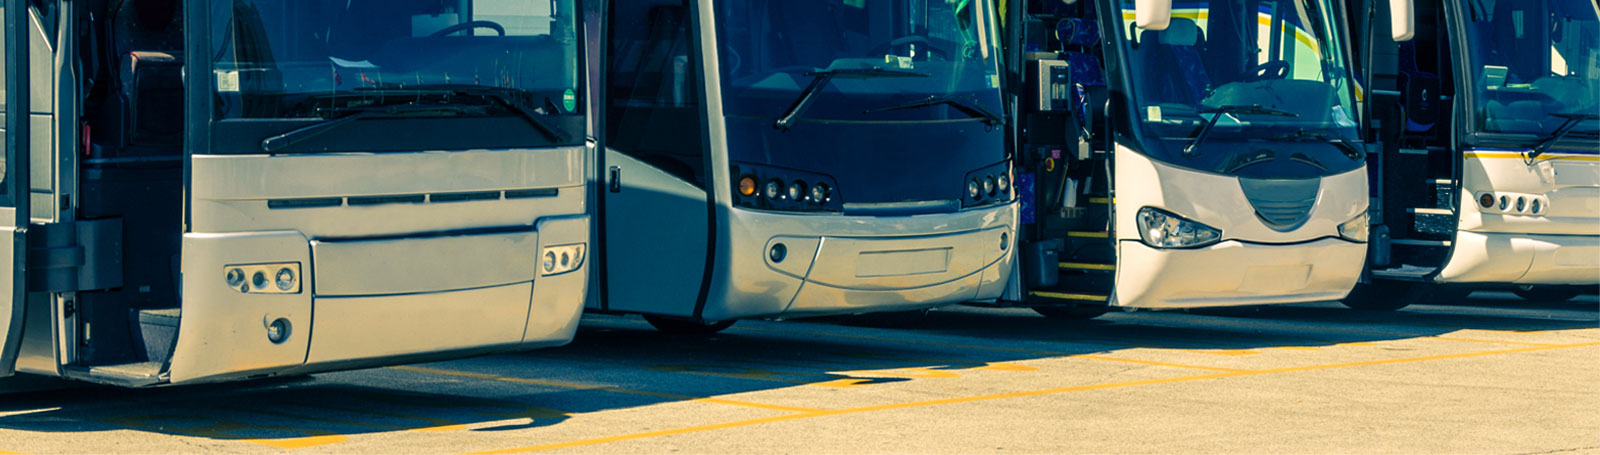 Bus Passenger rights